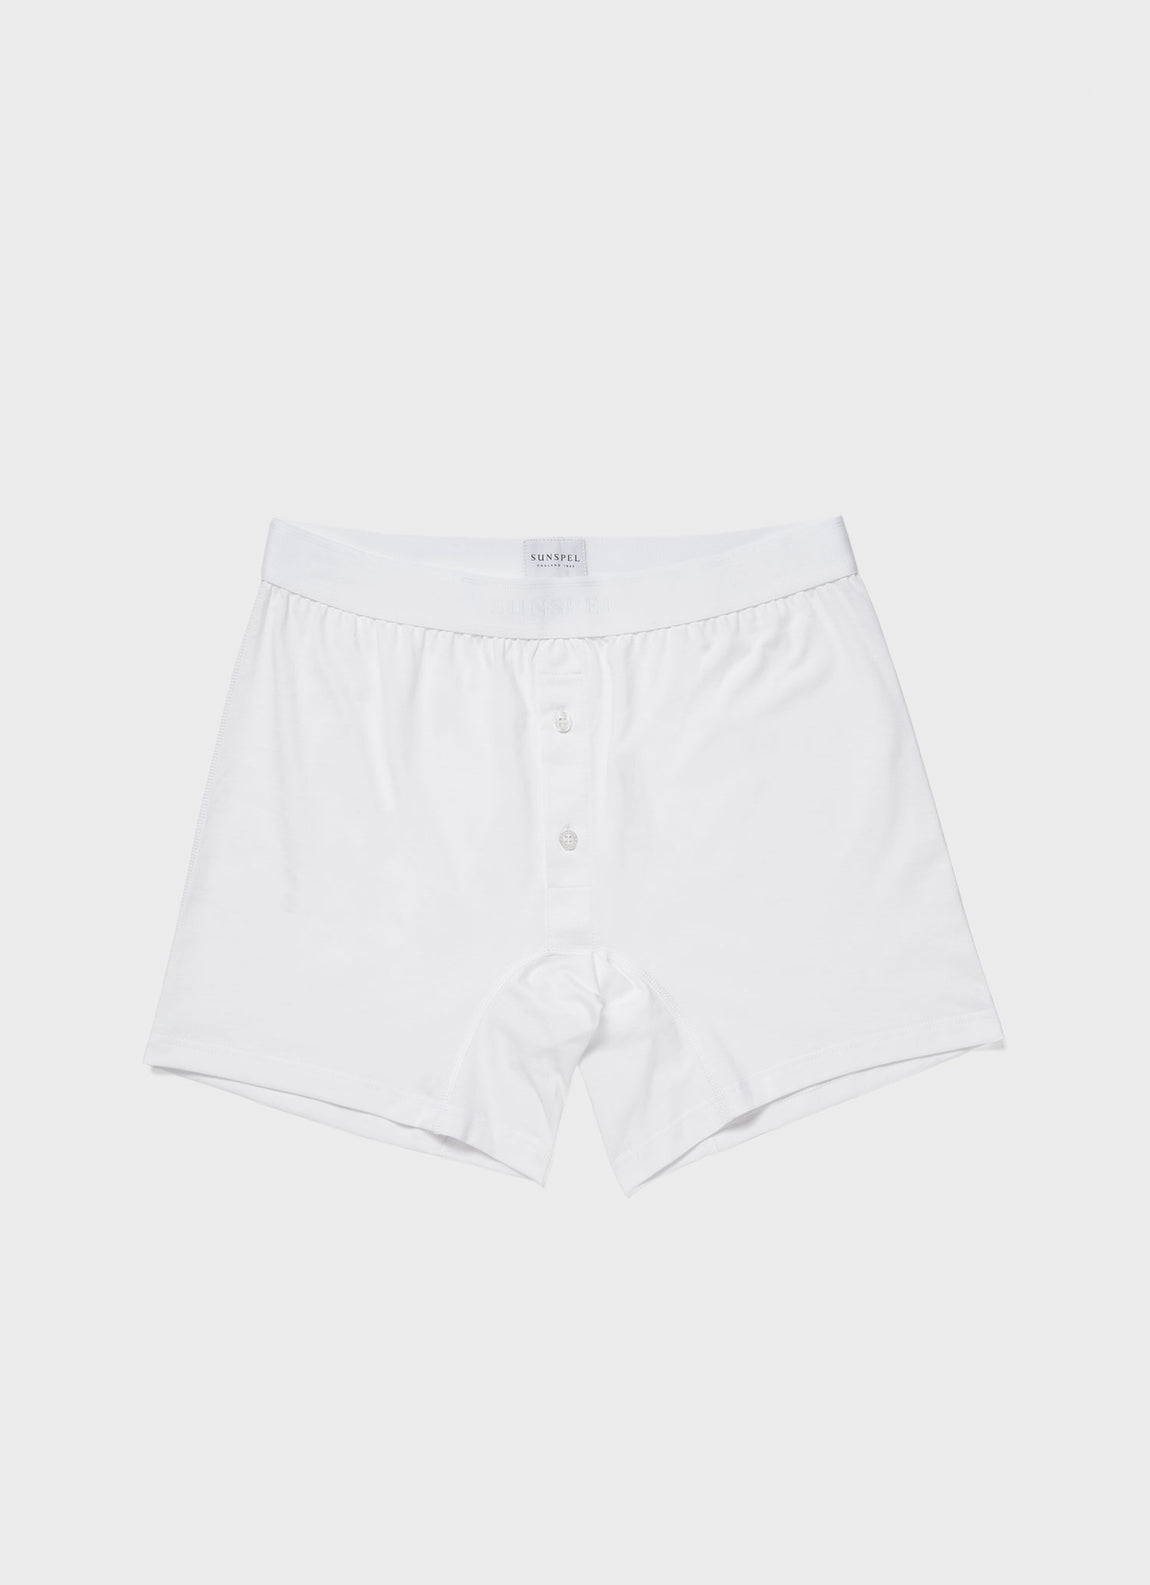 Men's Superfine Cotton Two-Button Shorts in White | Sunspel